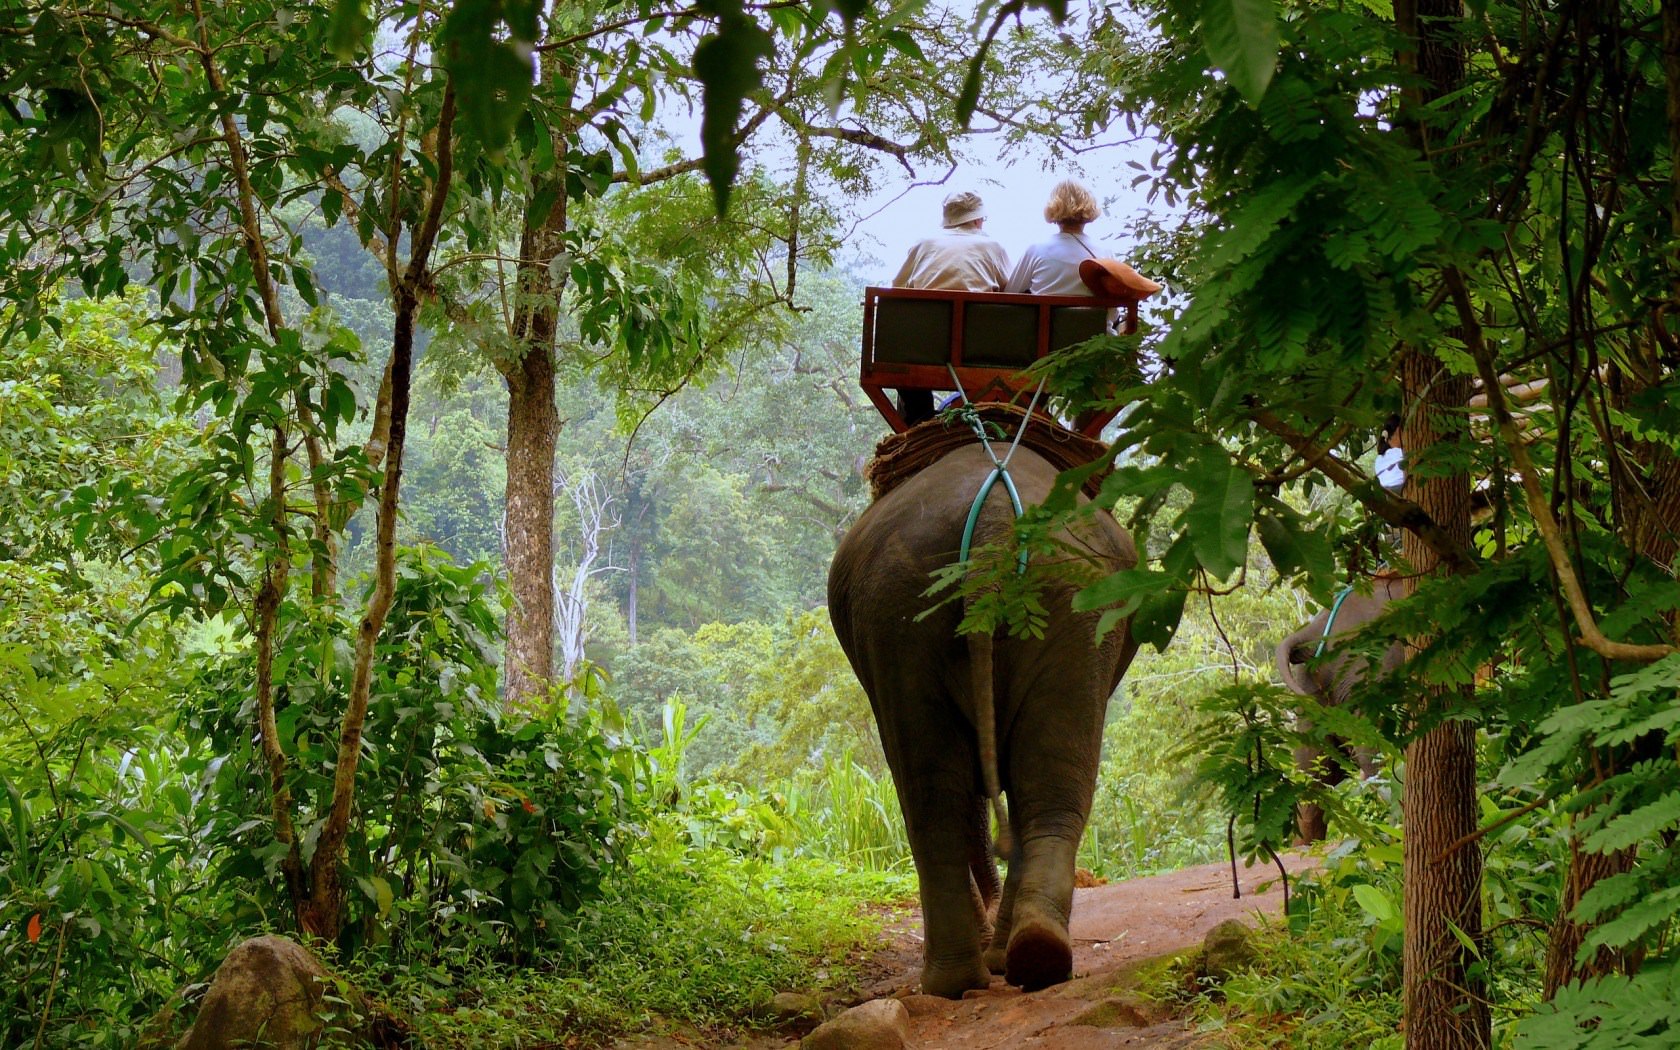 Elephants Elephant Ride